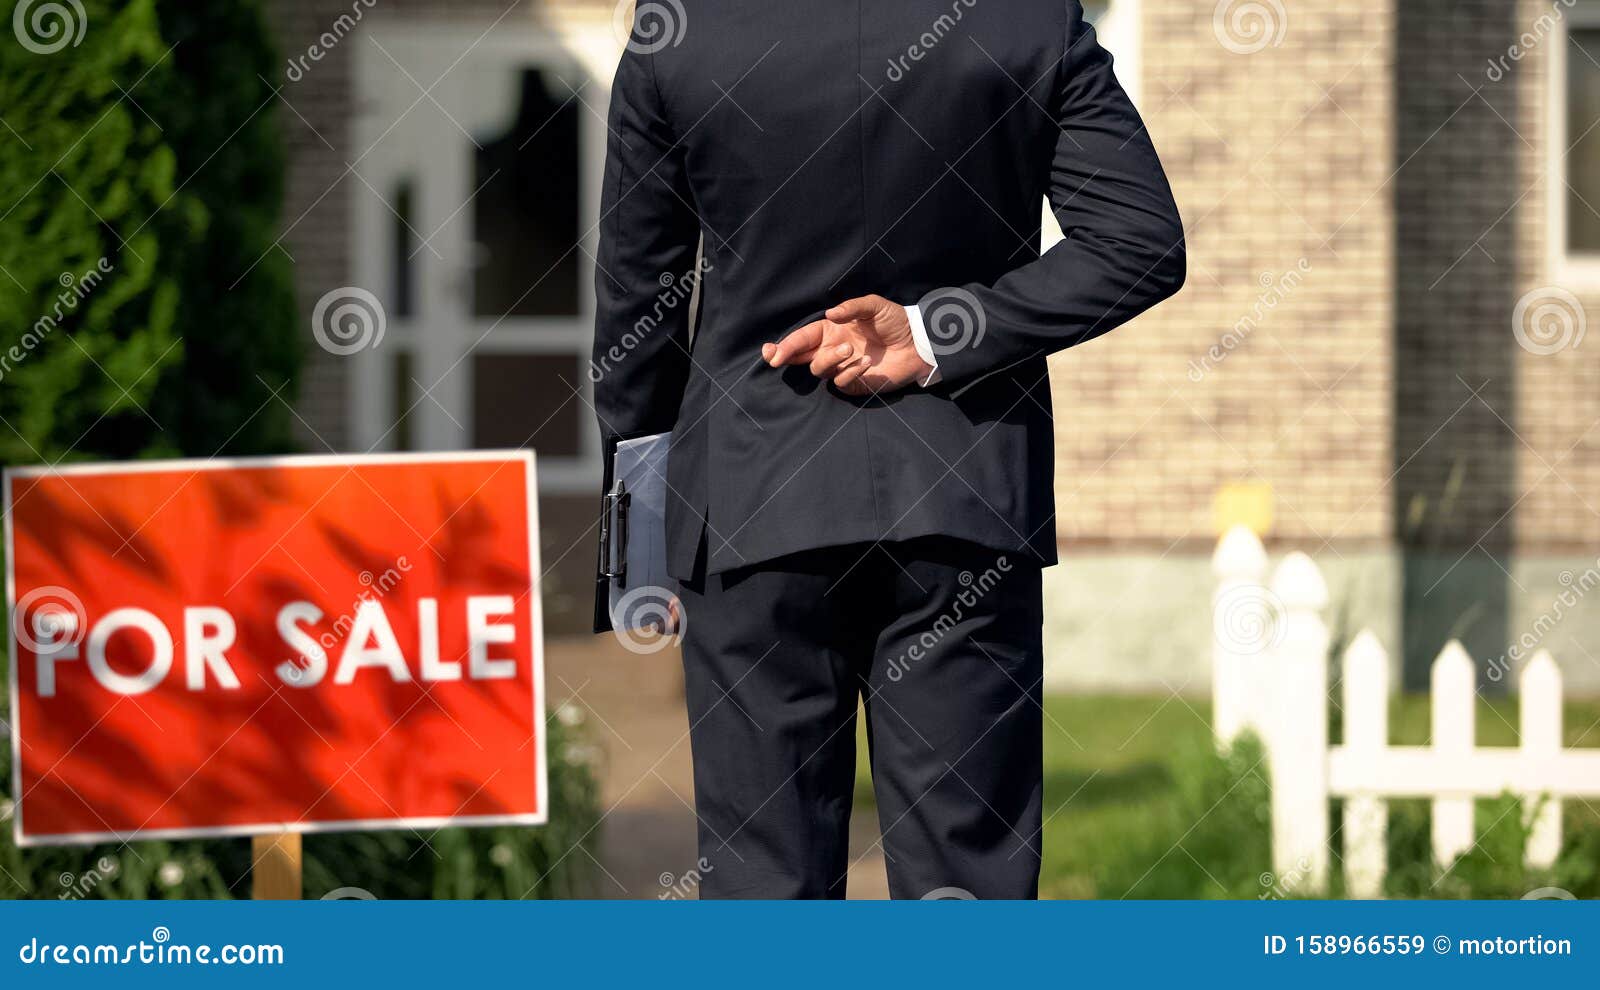 inexperienced broker crossing fingers behind his back before selling house, luck